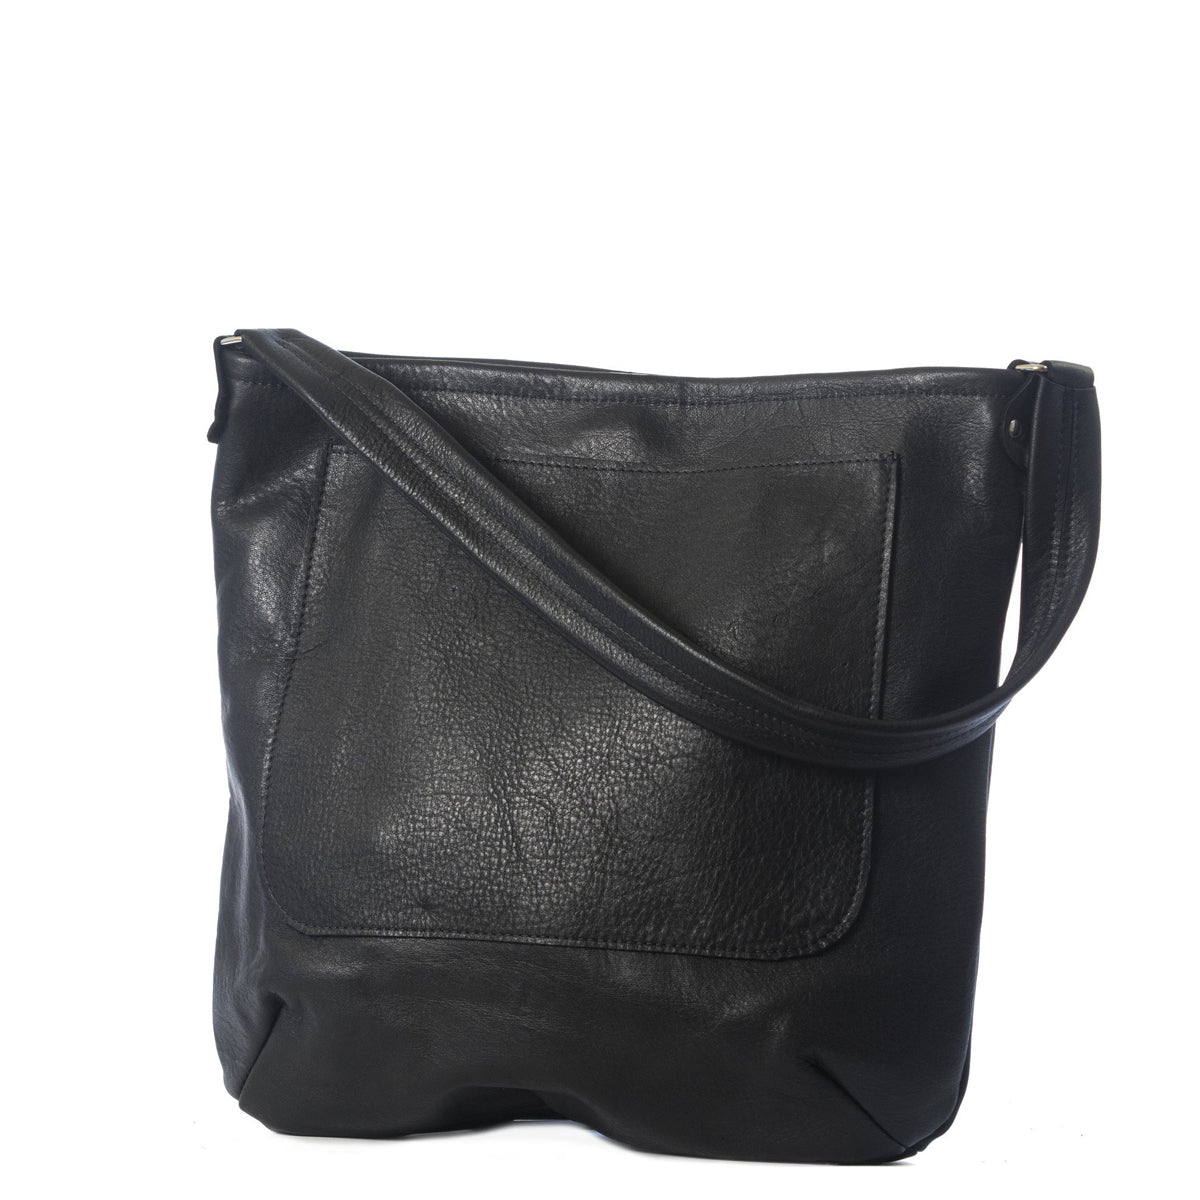 Black leather shoulder bag handmade in the USA by Vicki Jean.